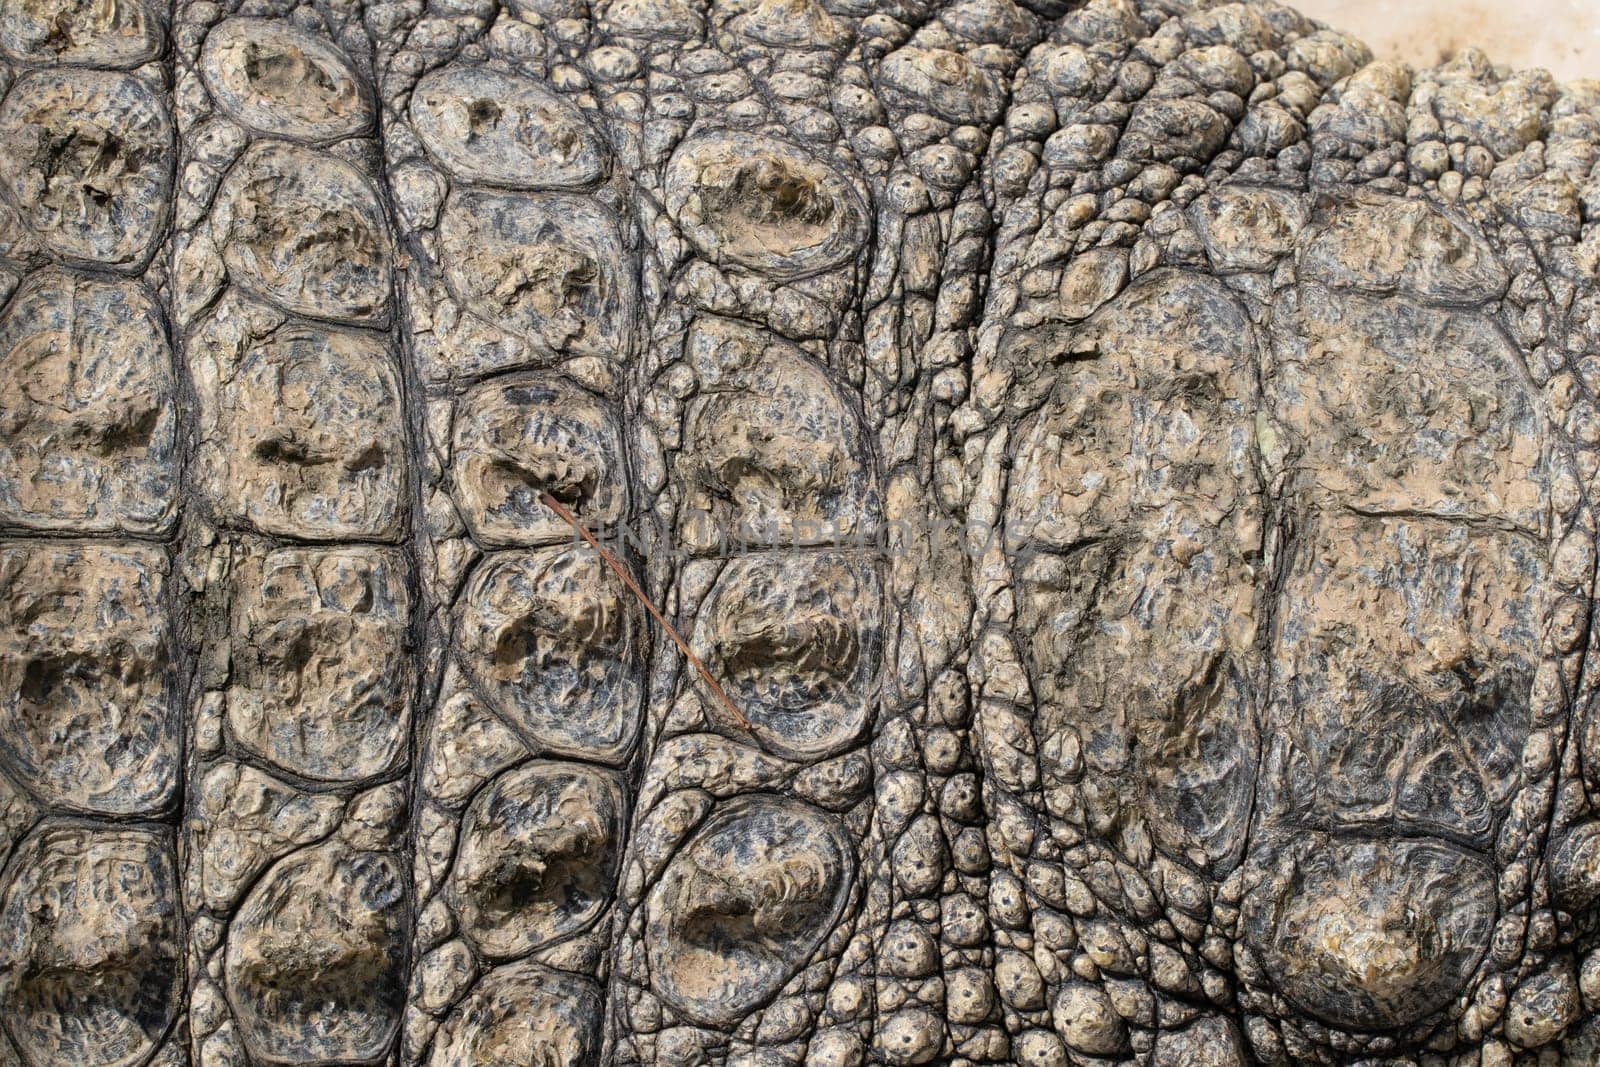 Crocodile skin texture in the sun. High quality photo